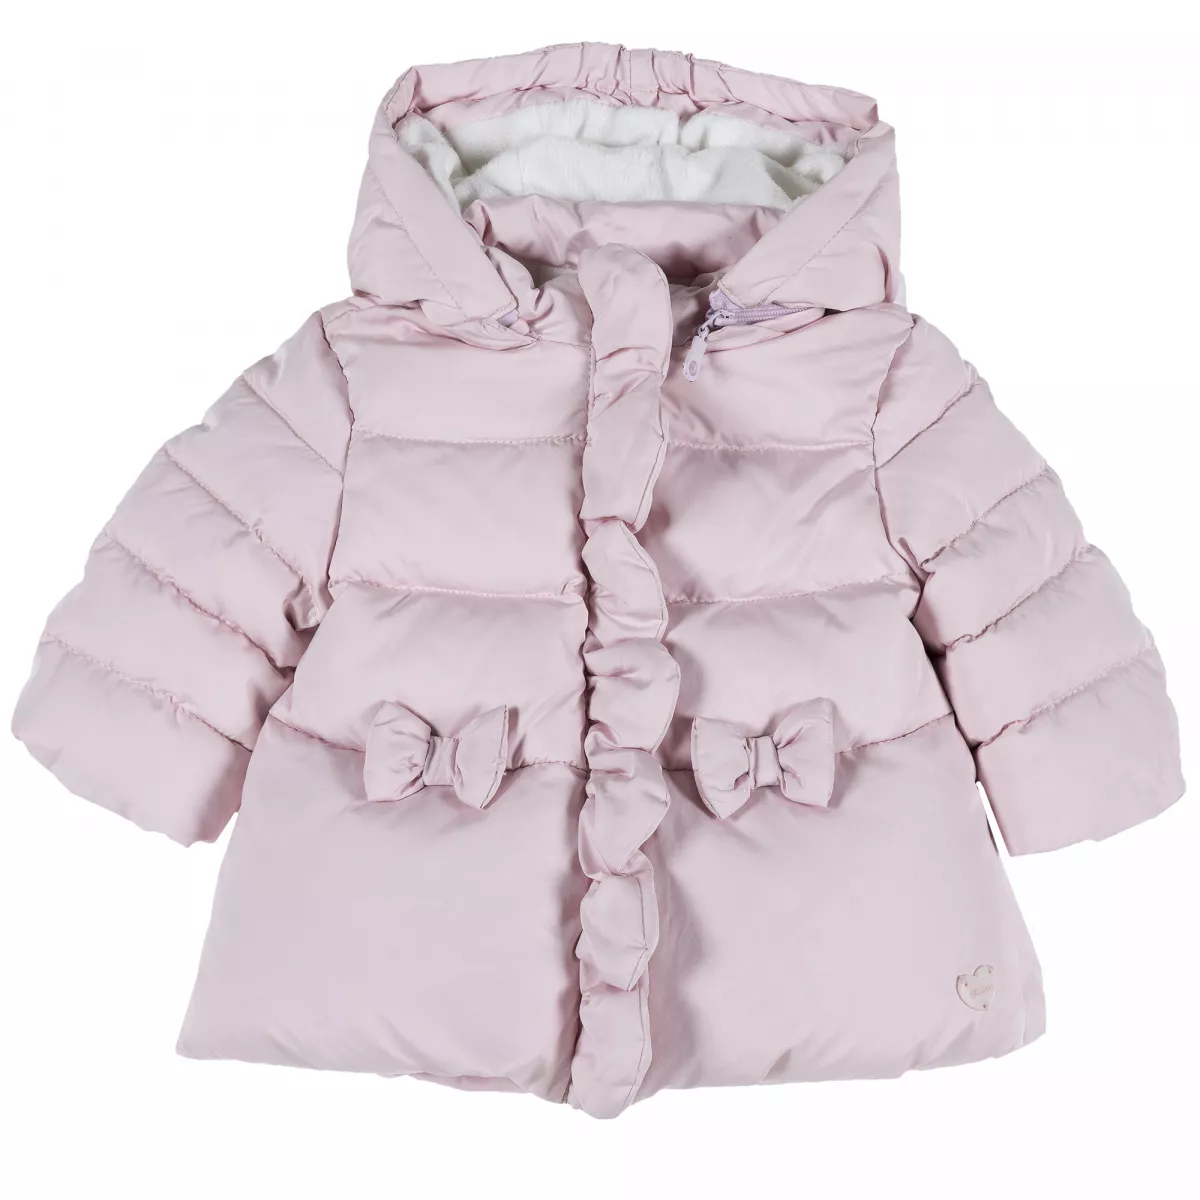 Jacheta copii Chicco, roz, 74